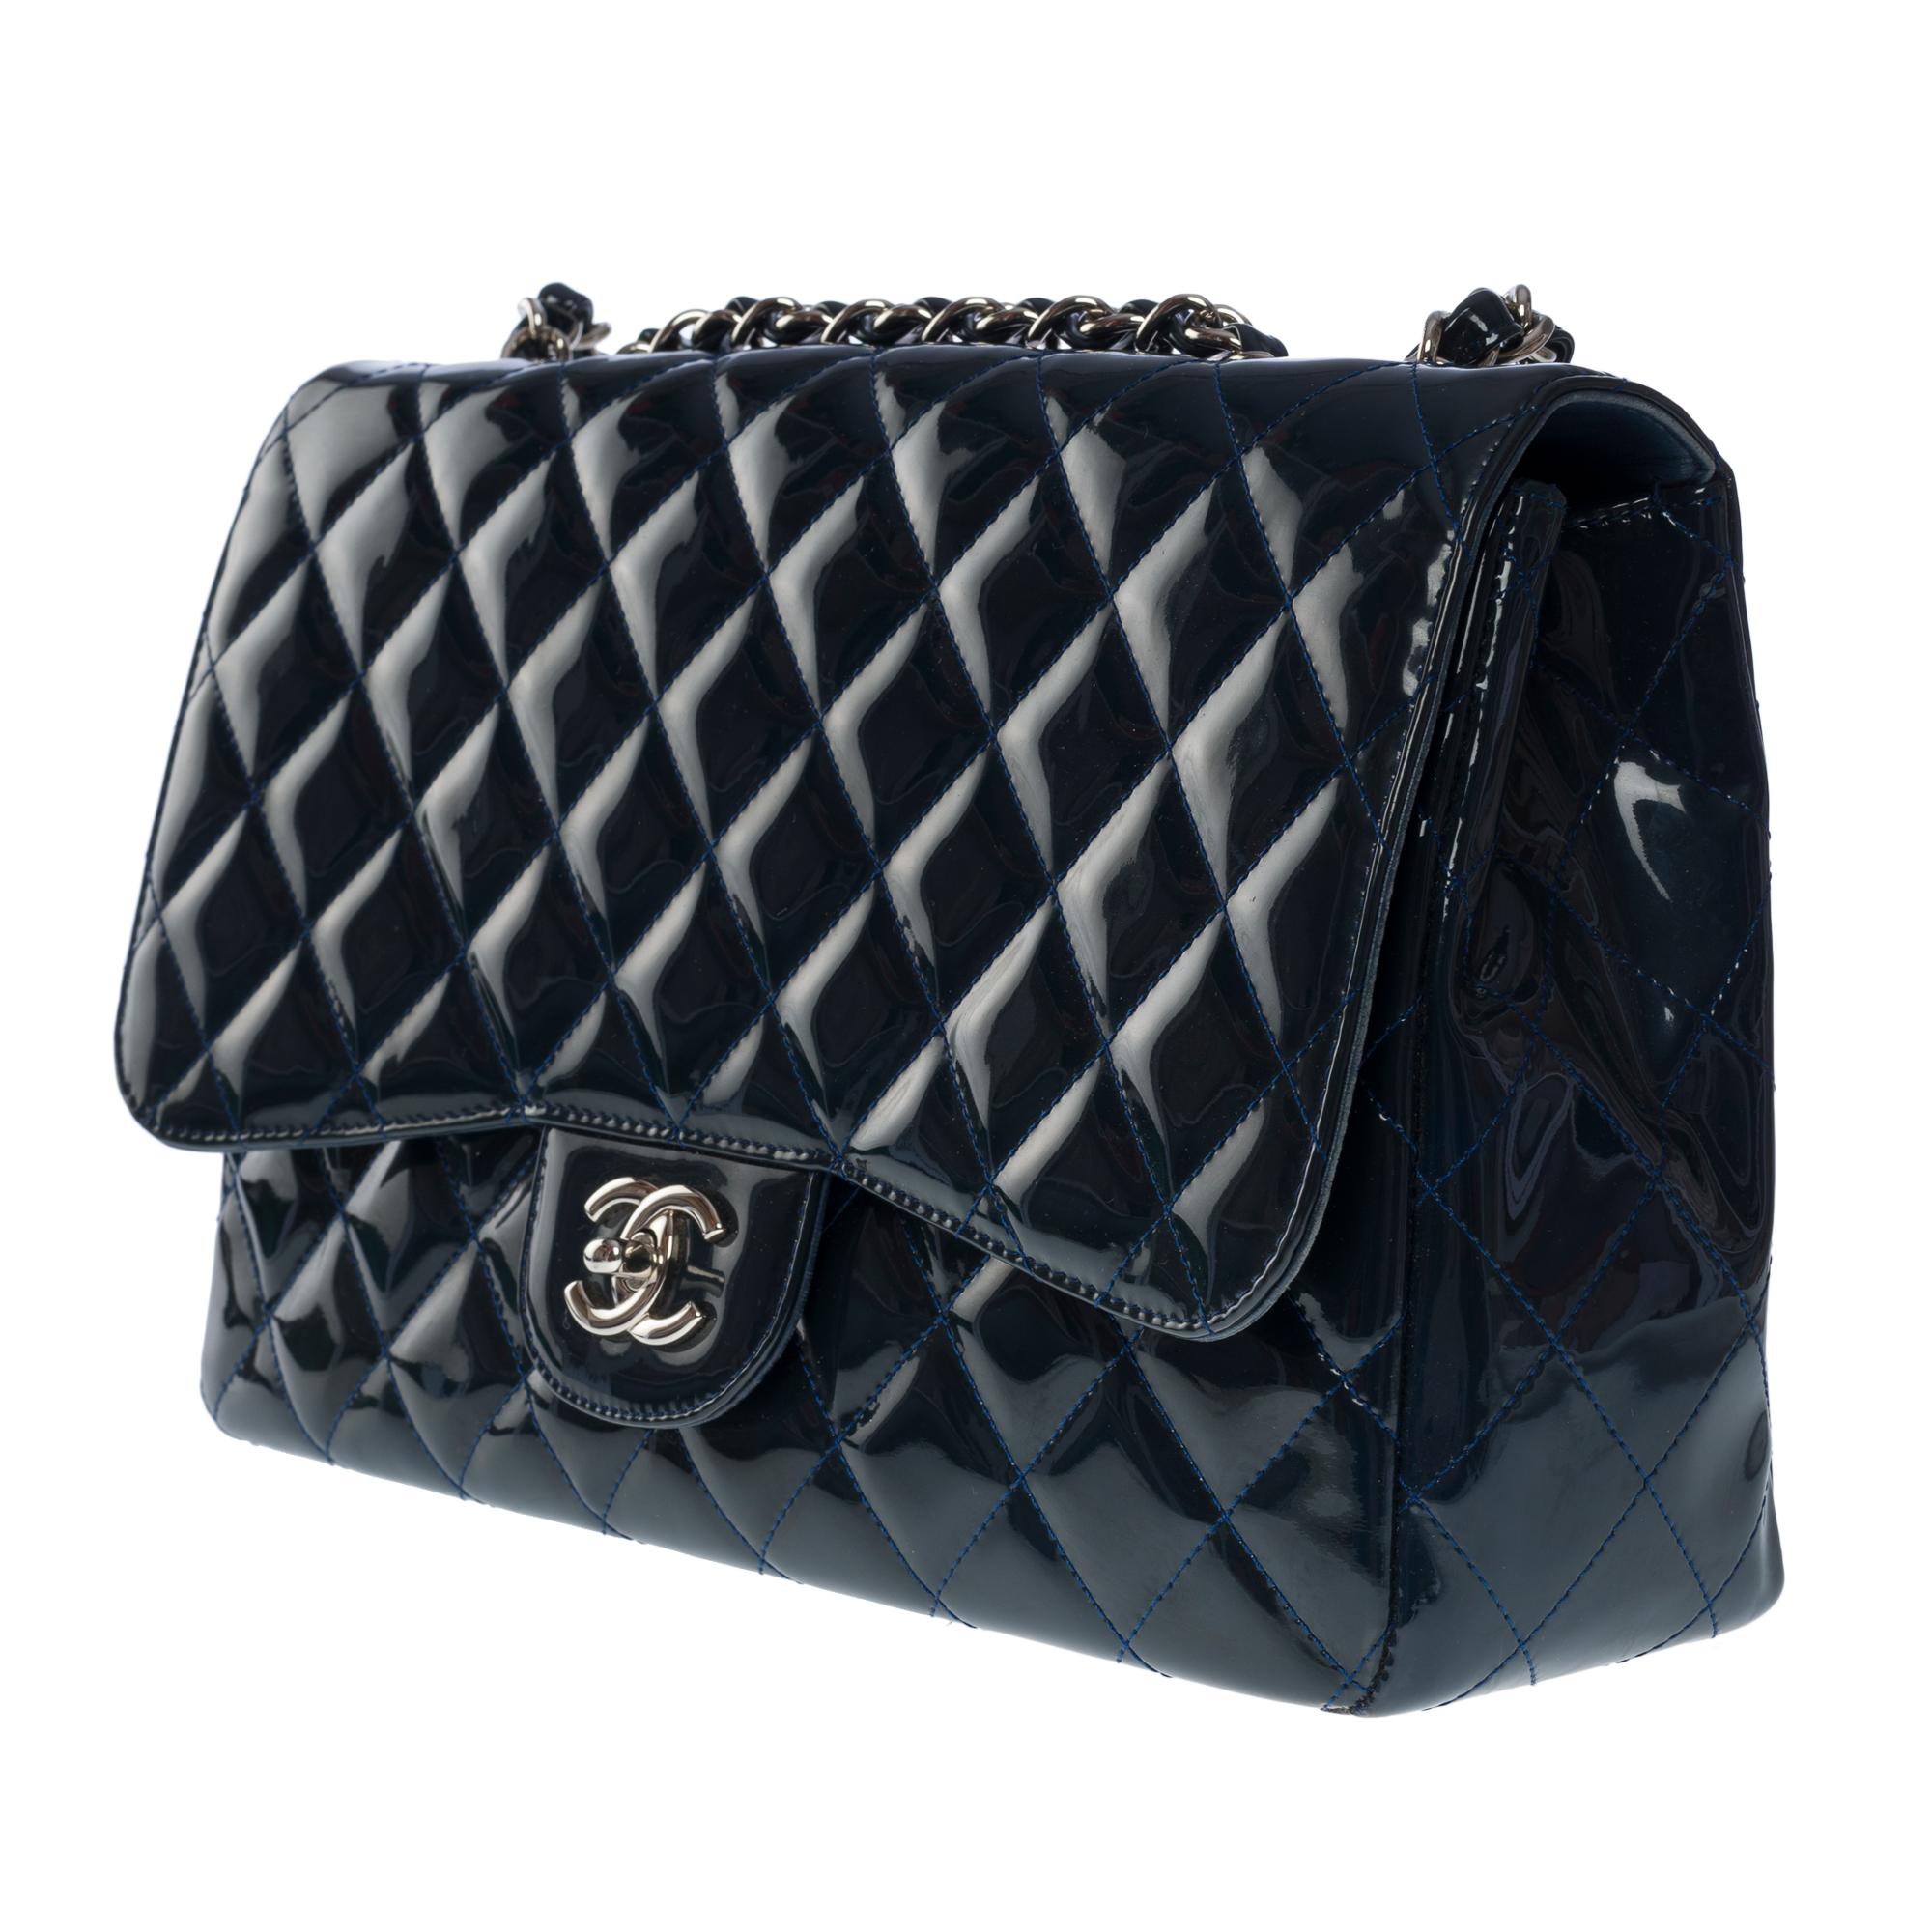 Women's Lovely Chanel Timeless Jumbo shoulder flap bag in Navy blue patent leather, SHW